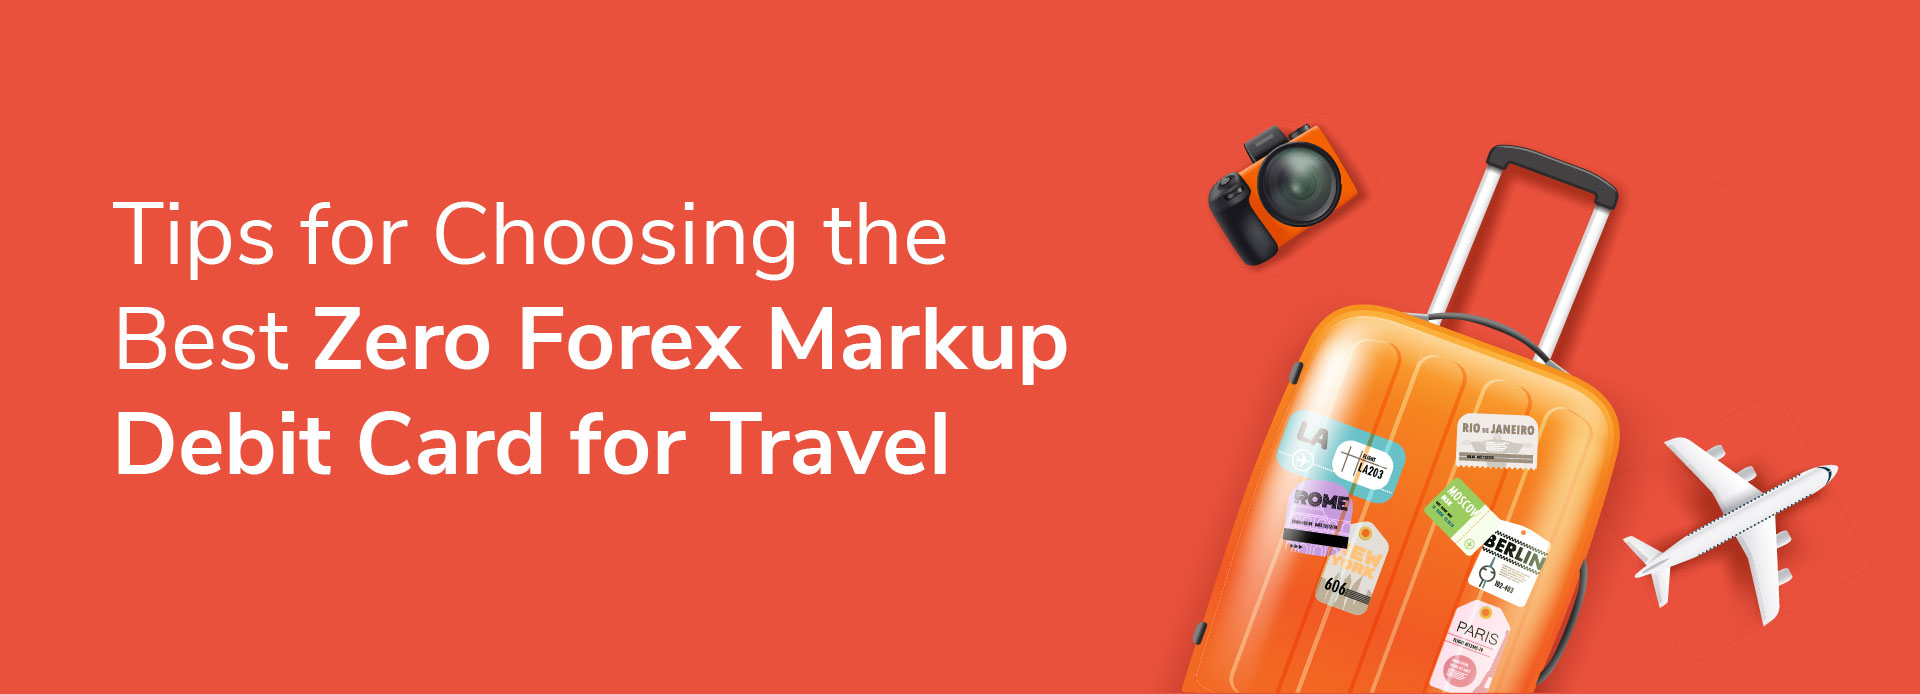 Tips for Choosing the Best Zero Markup Debit Card for Travel 